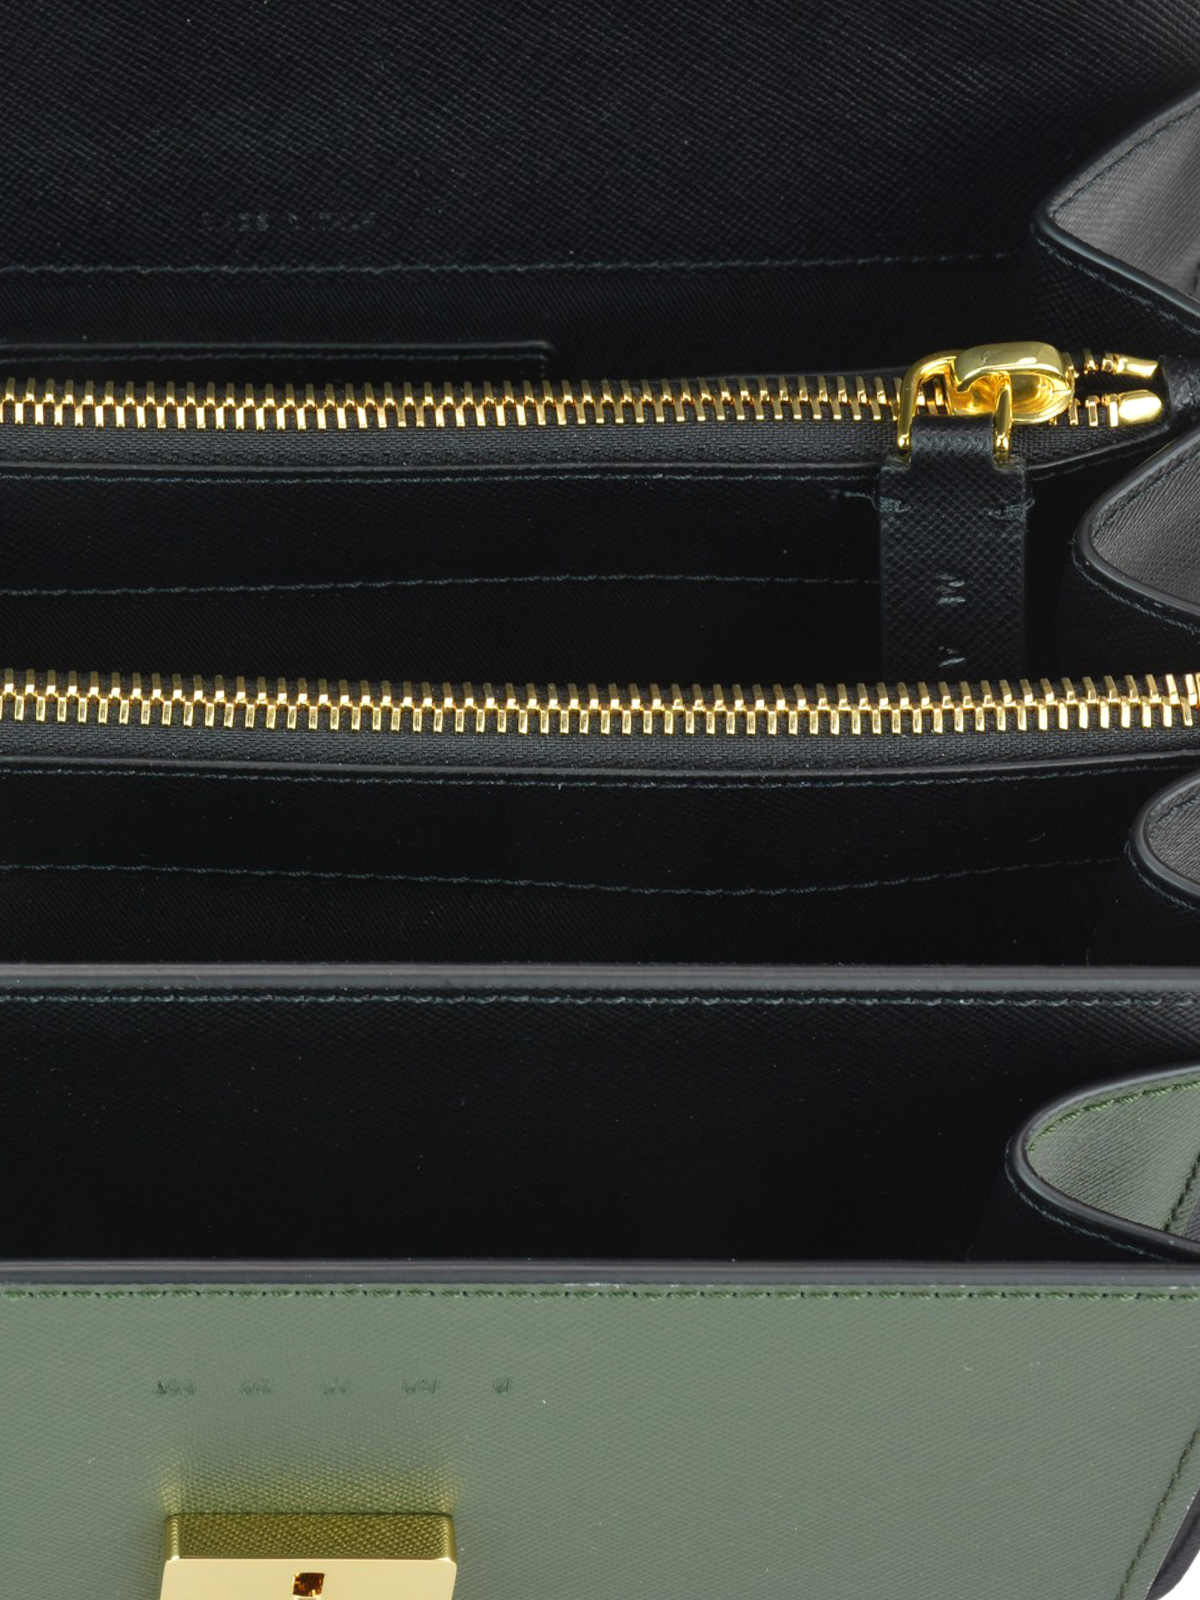 Trunk medium bag in black saffiano leather